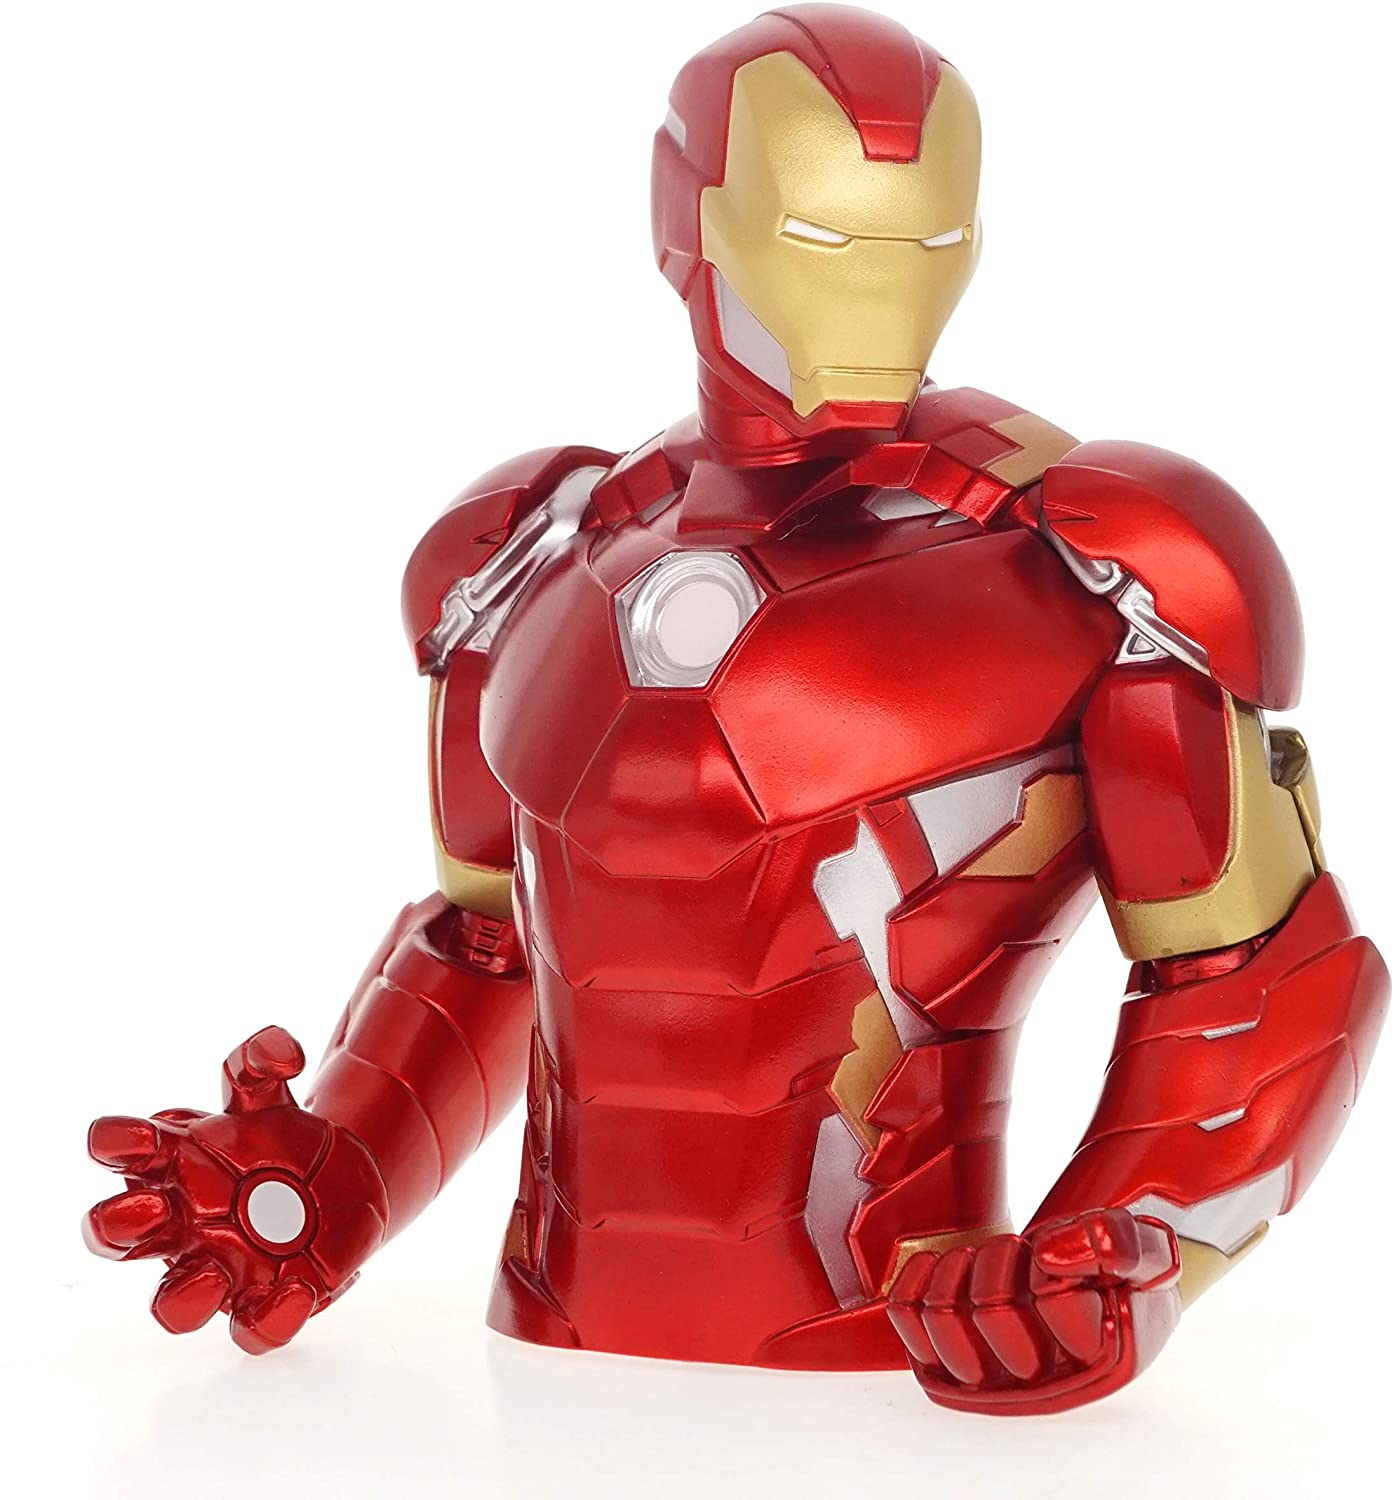 Marvel - Avengers Iron Man - Figural PVC Bust Bank